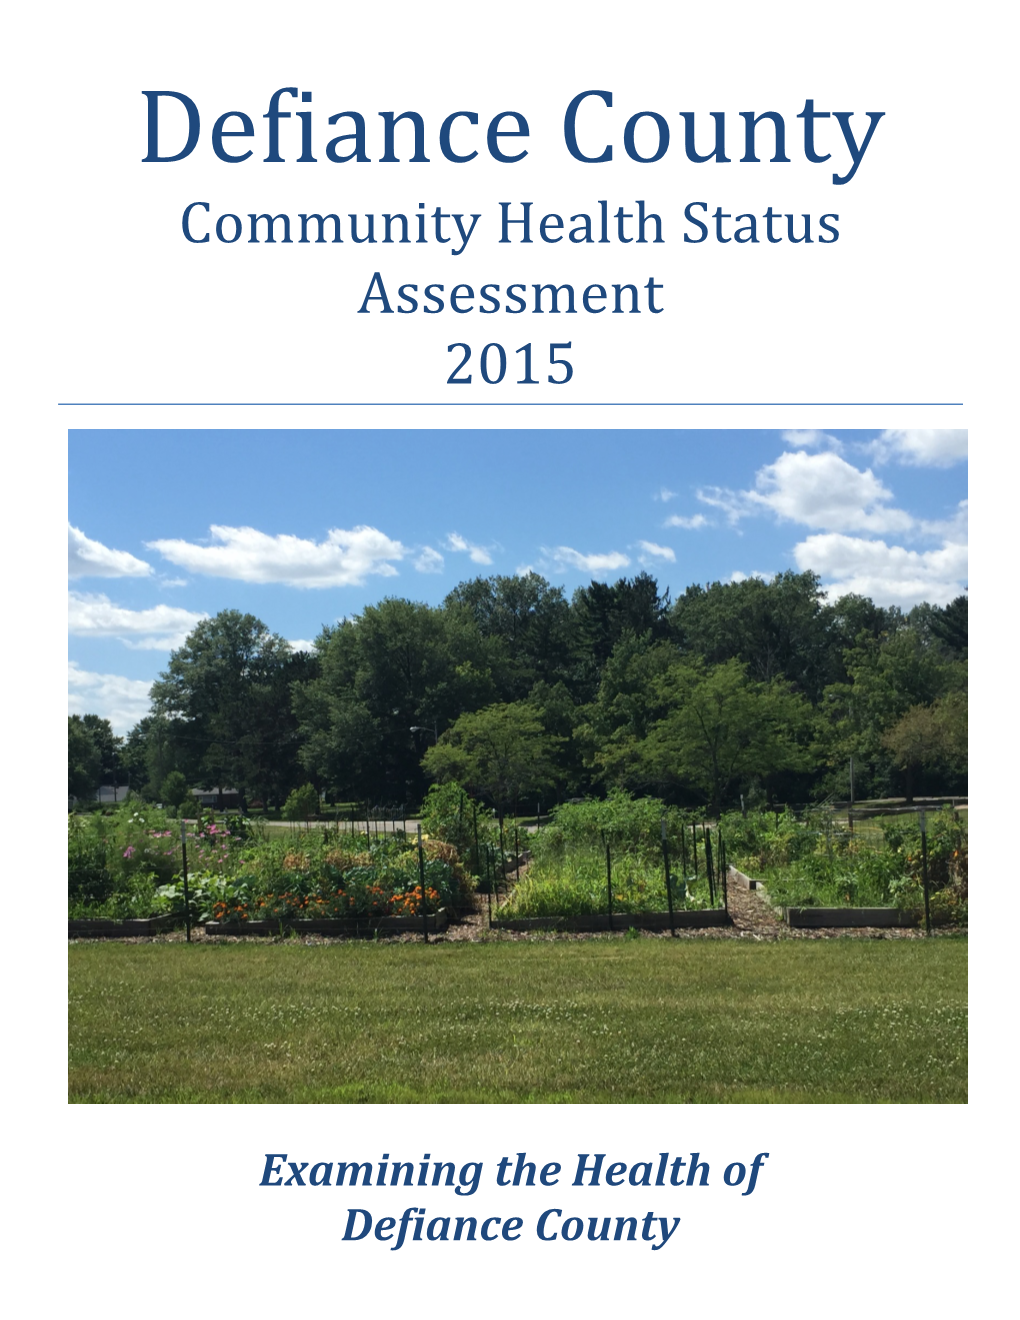 Defiance County Community Health Status Assessment 2015